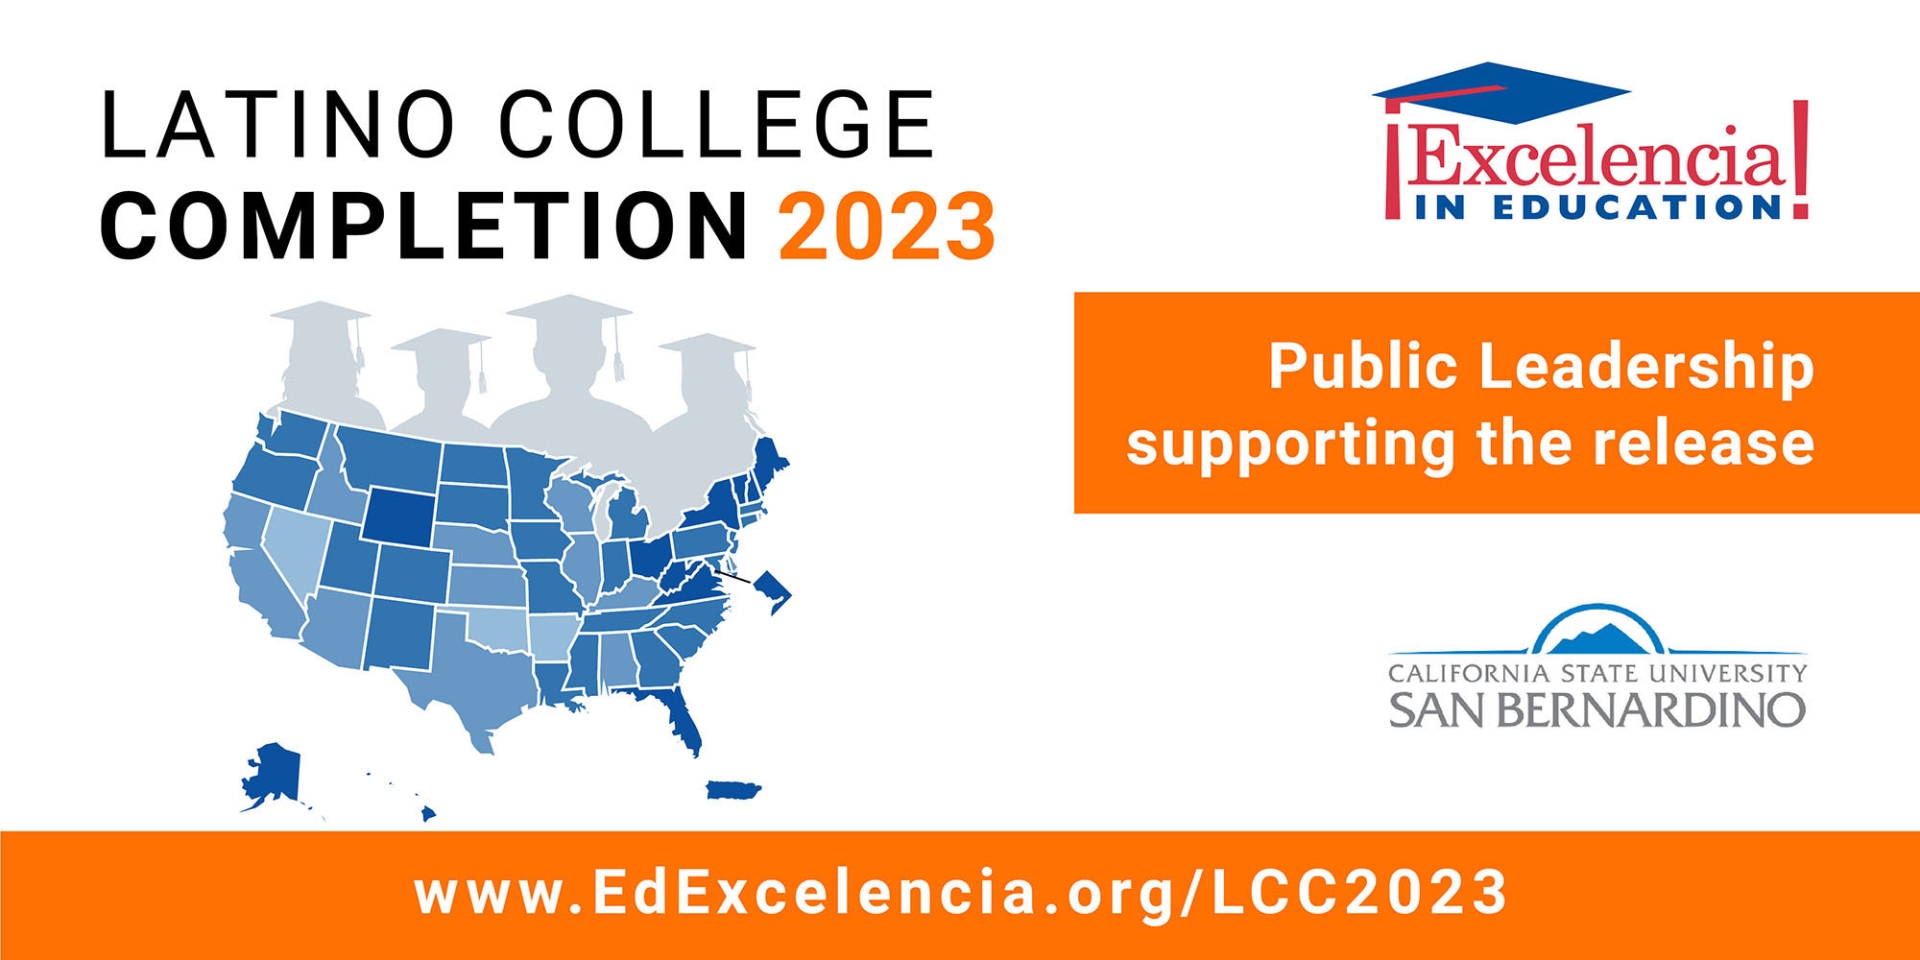 Excelencia in Education Latino College Completion CSUSB graphic